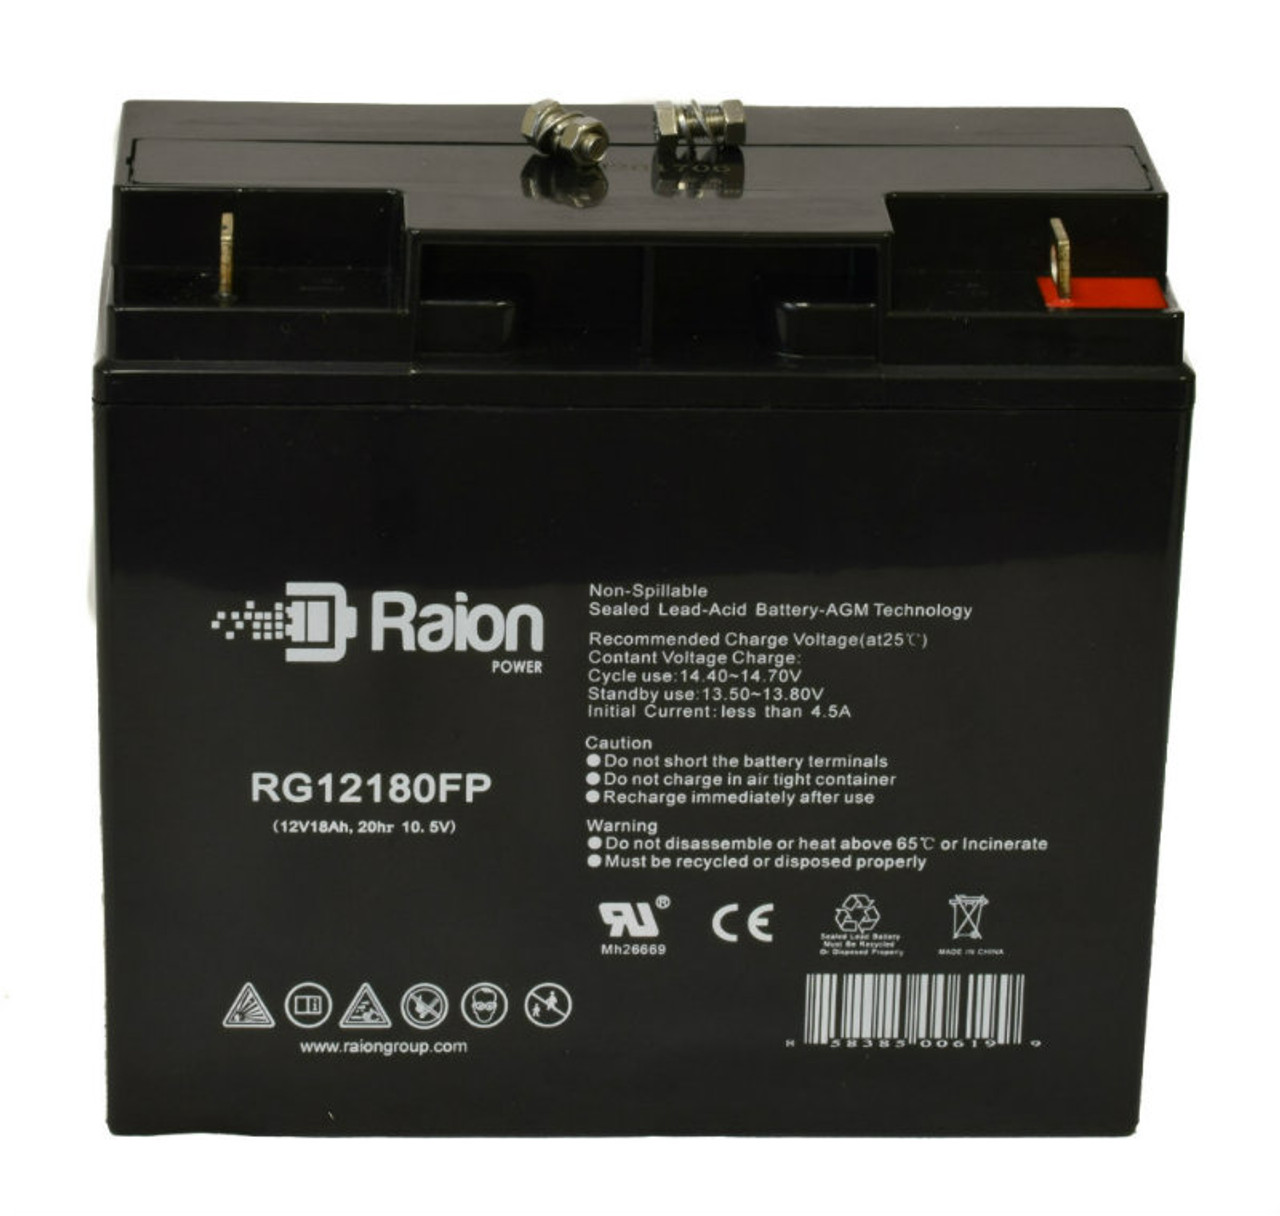 Raion Power RG12180FP 12V 18Ah Lead Acid Battery for Golden Technologies Buzzaround XL GB116 BLUE